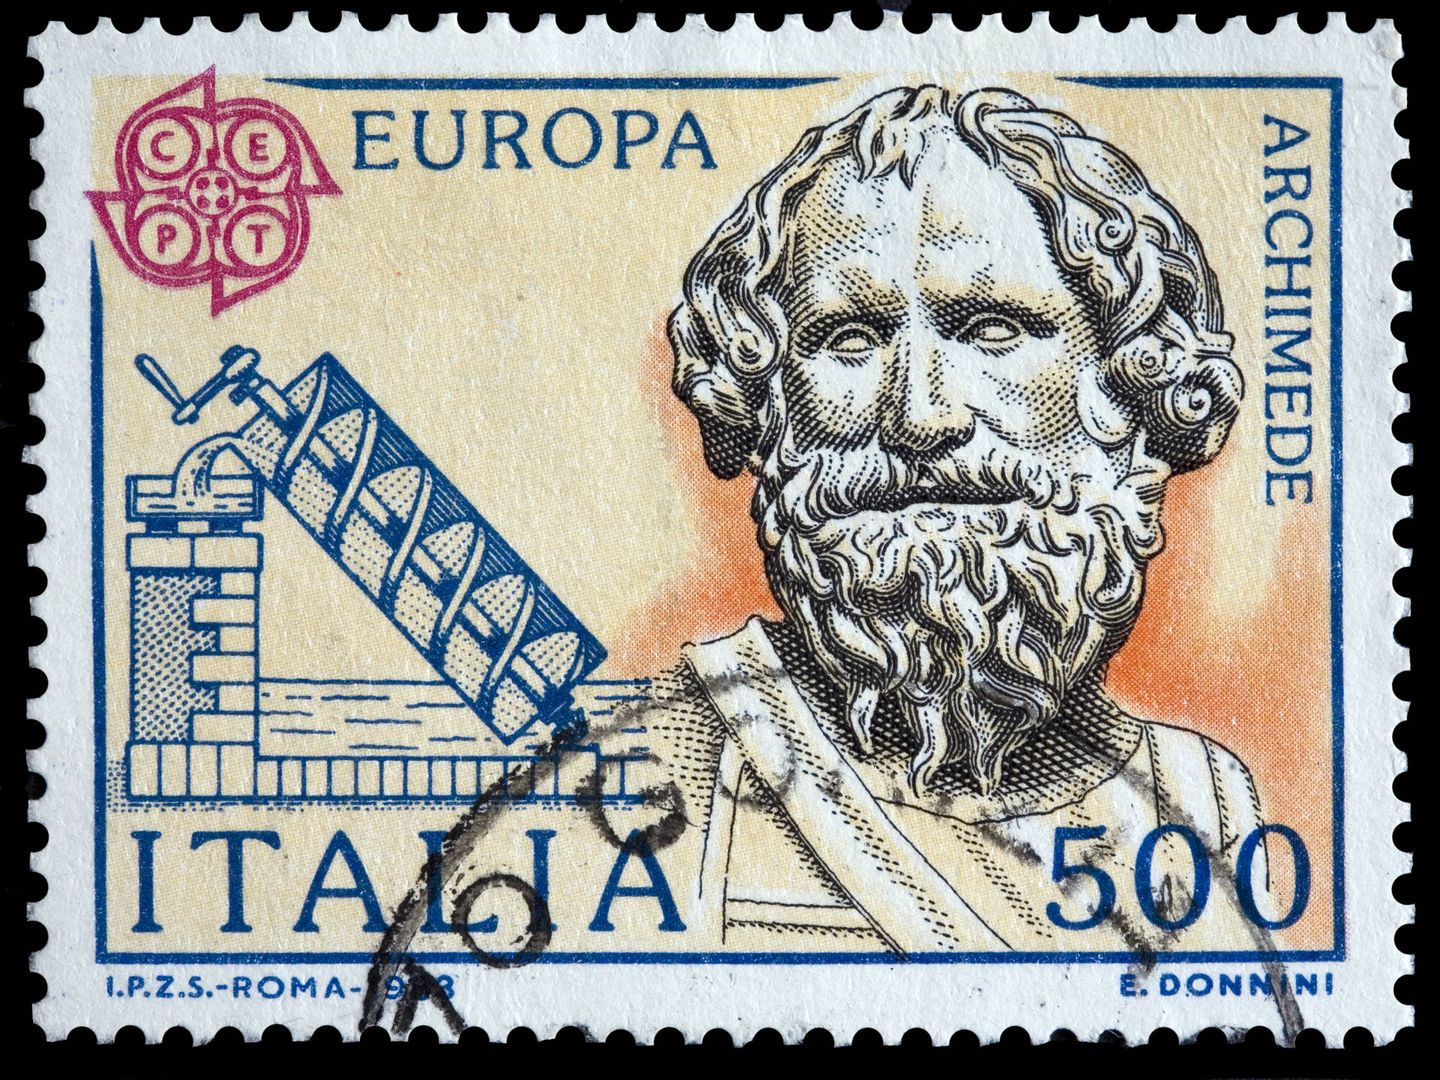 Sello italiano con la imagen de Arquímedes (Fuente: iStock)